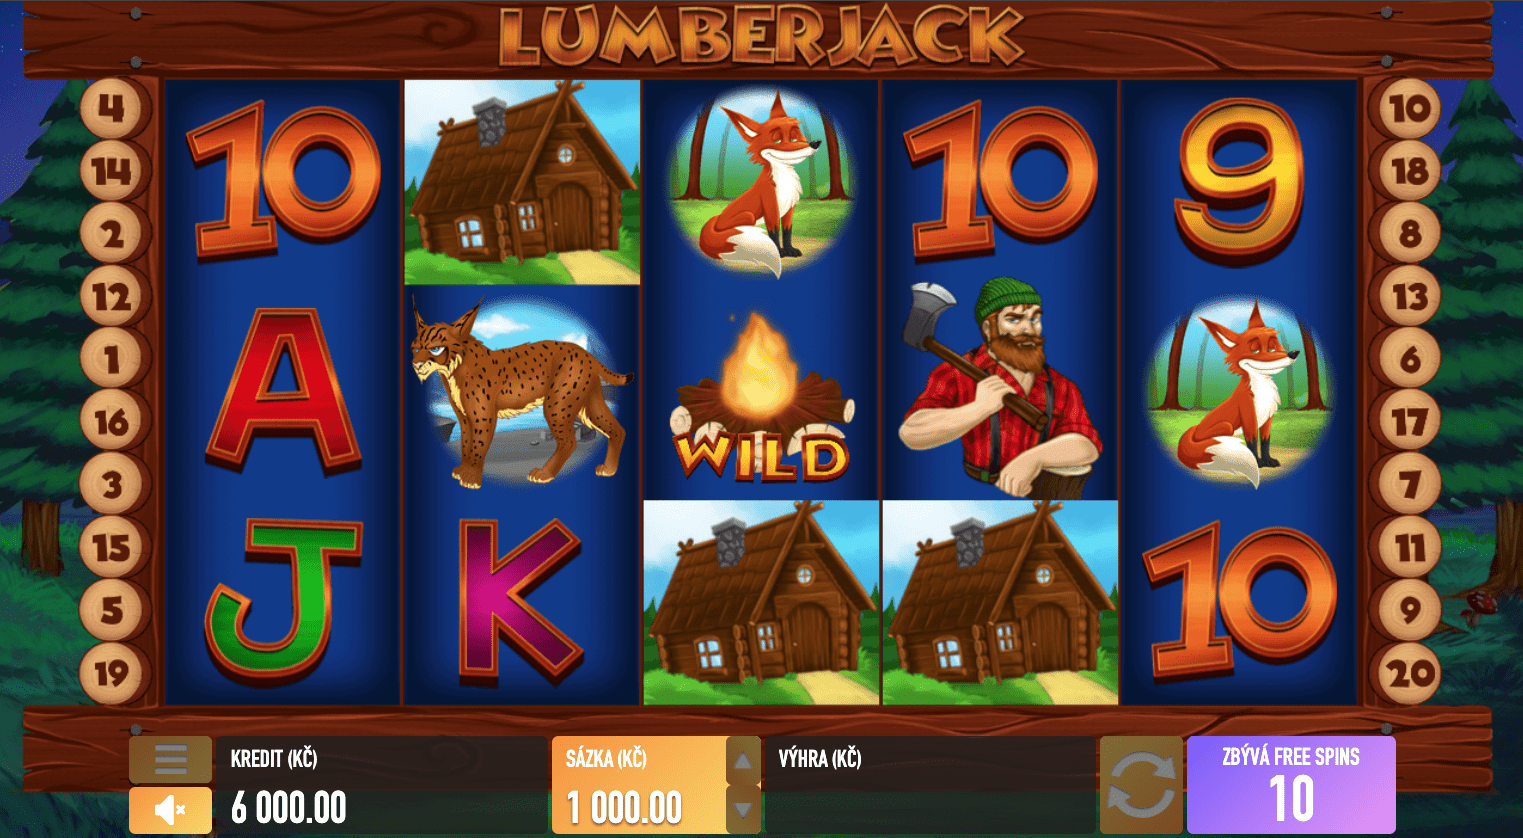 Slot Lumberjack online oleh Tech4bet - pratinjau roll